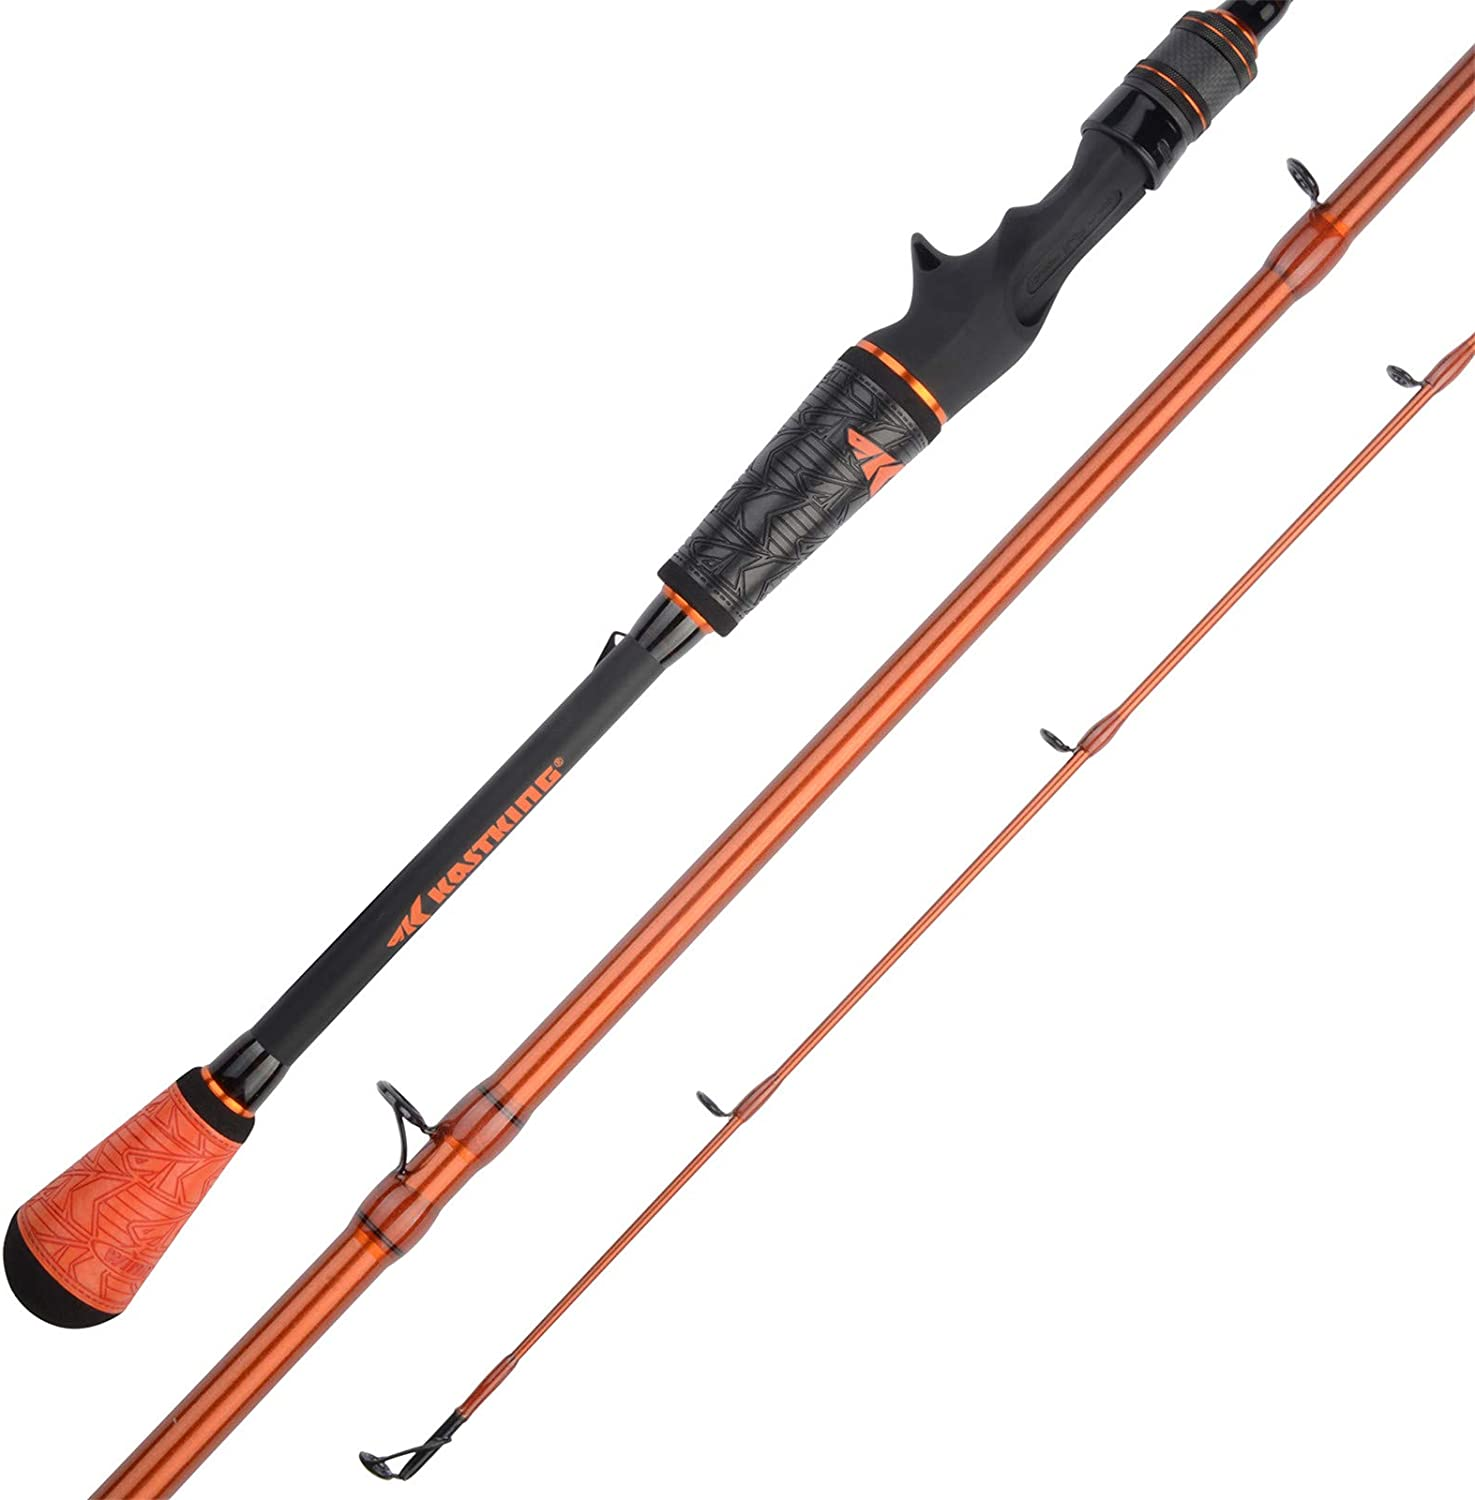 2. KastKing Speed Demon Pro Tournament Series Bass Fishing Rods - Best Baitcasting Rod For Inshore Fishing